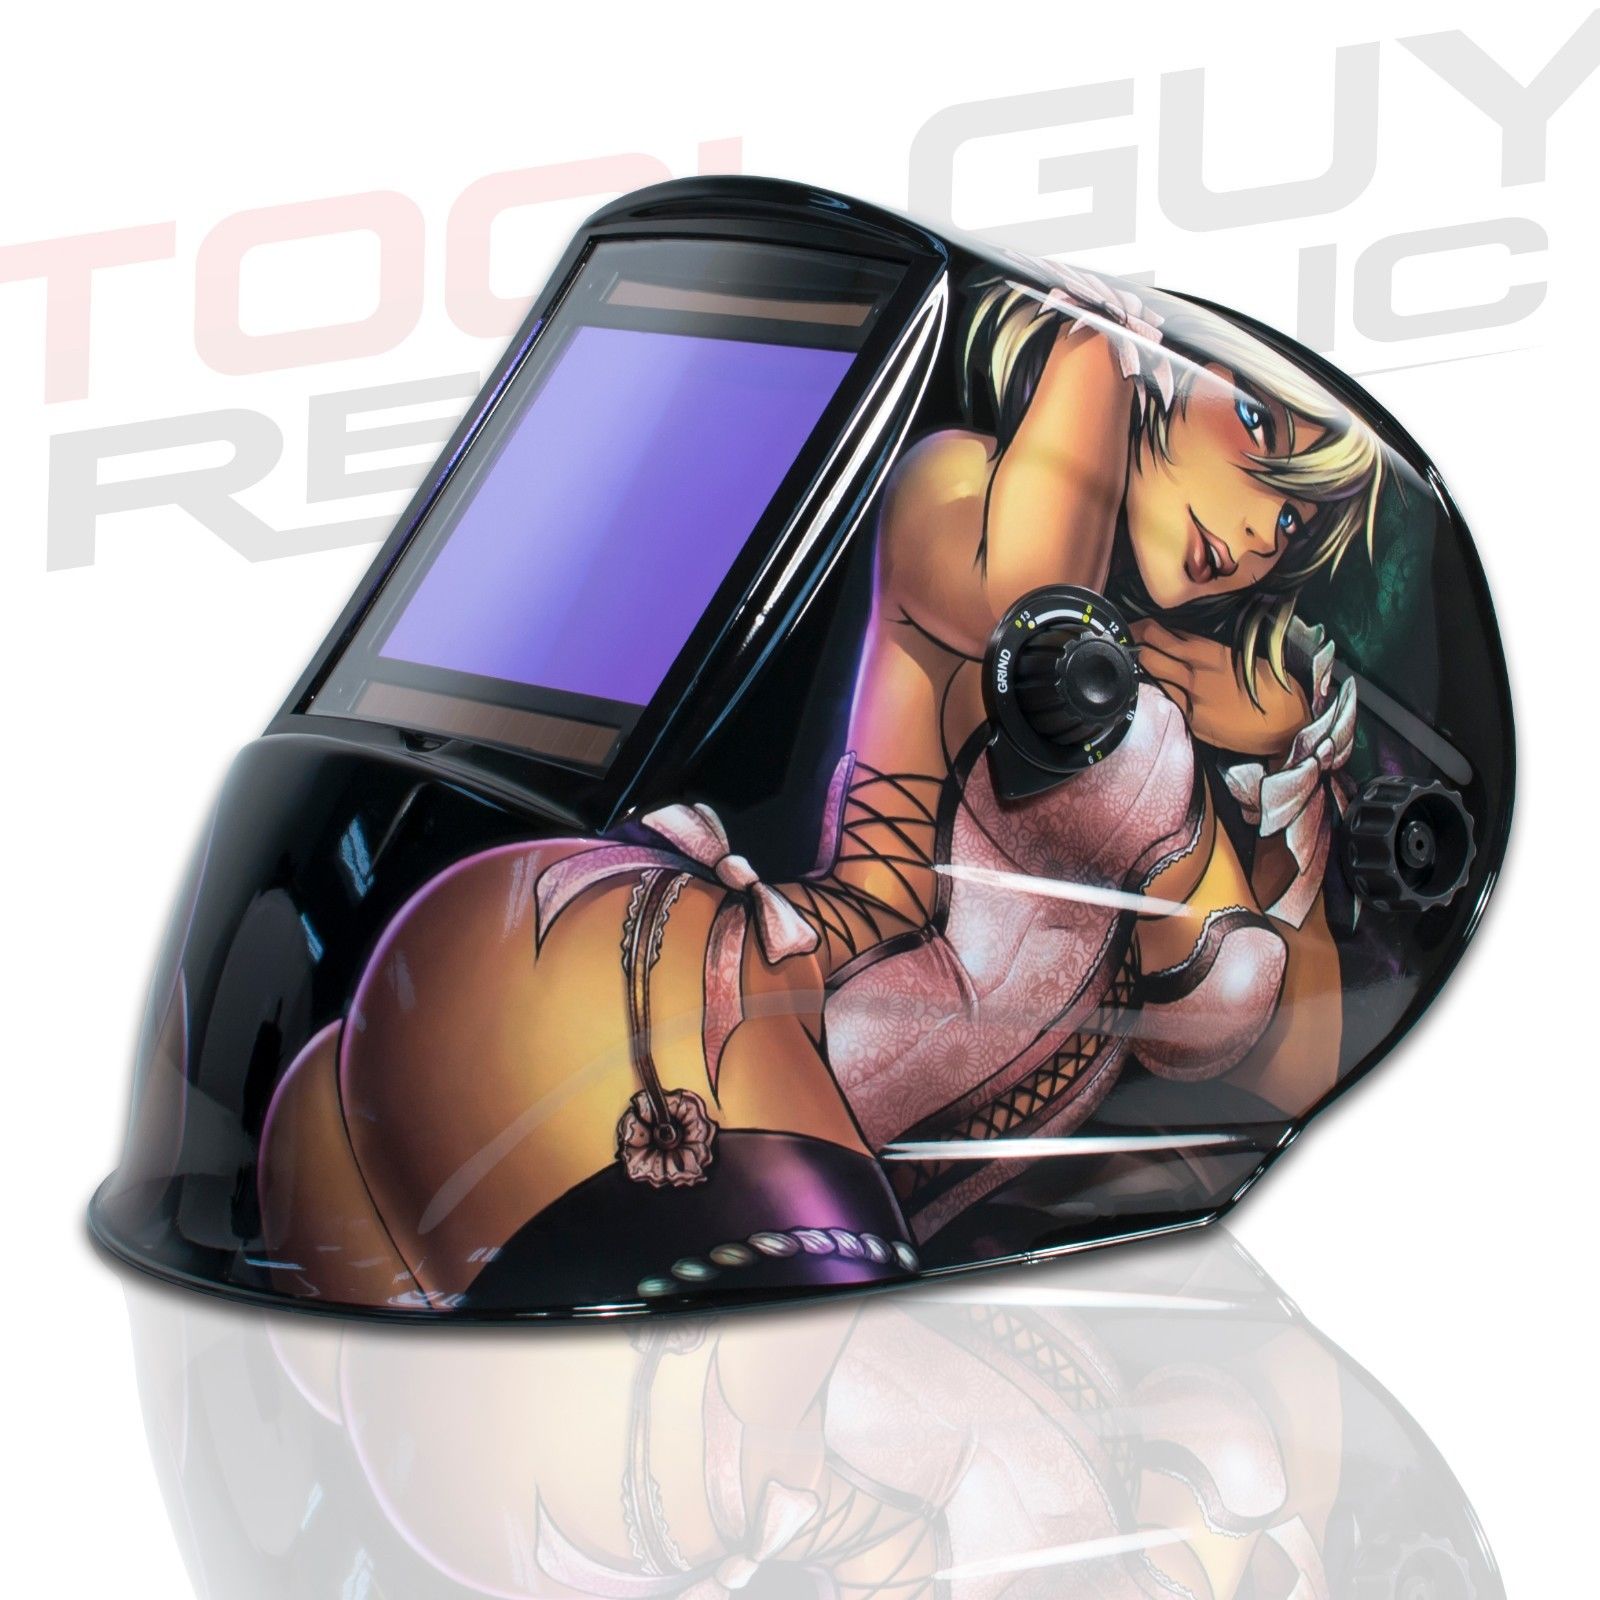 TGR Extra Large View Auto Darkening Welding Helmet - Anime Girl - 4"W x 3.65"H - Tool Guy Republic